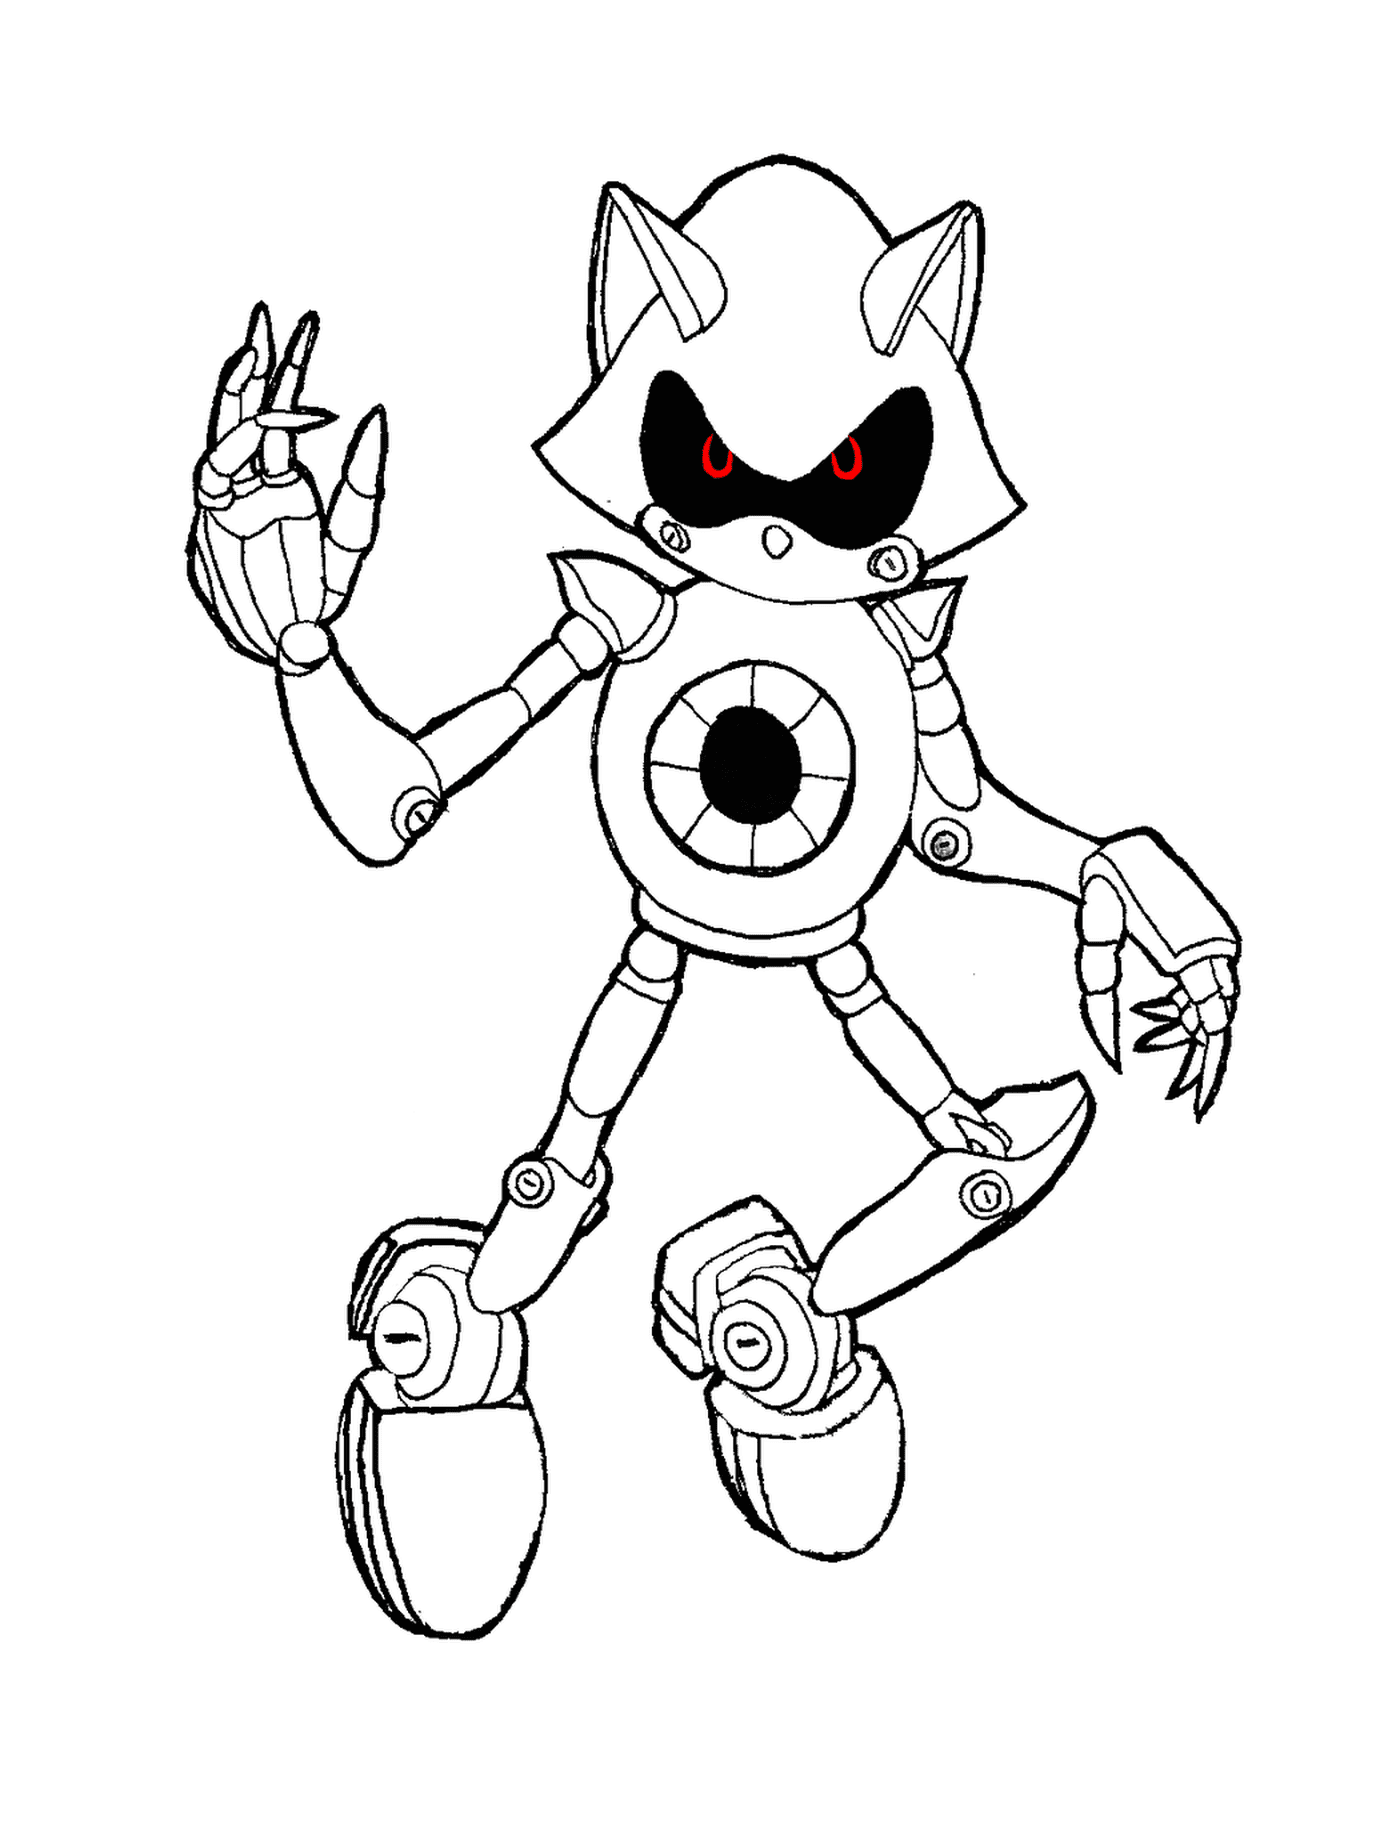  Sonic robô futurista 